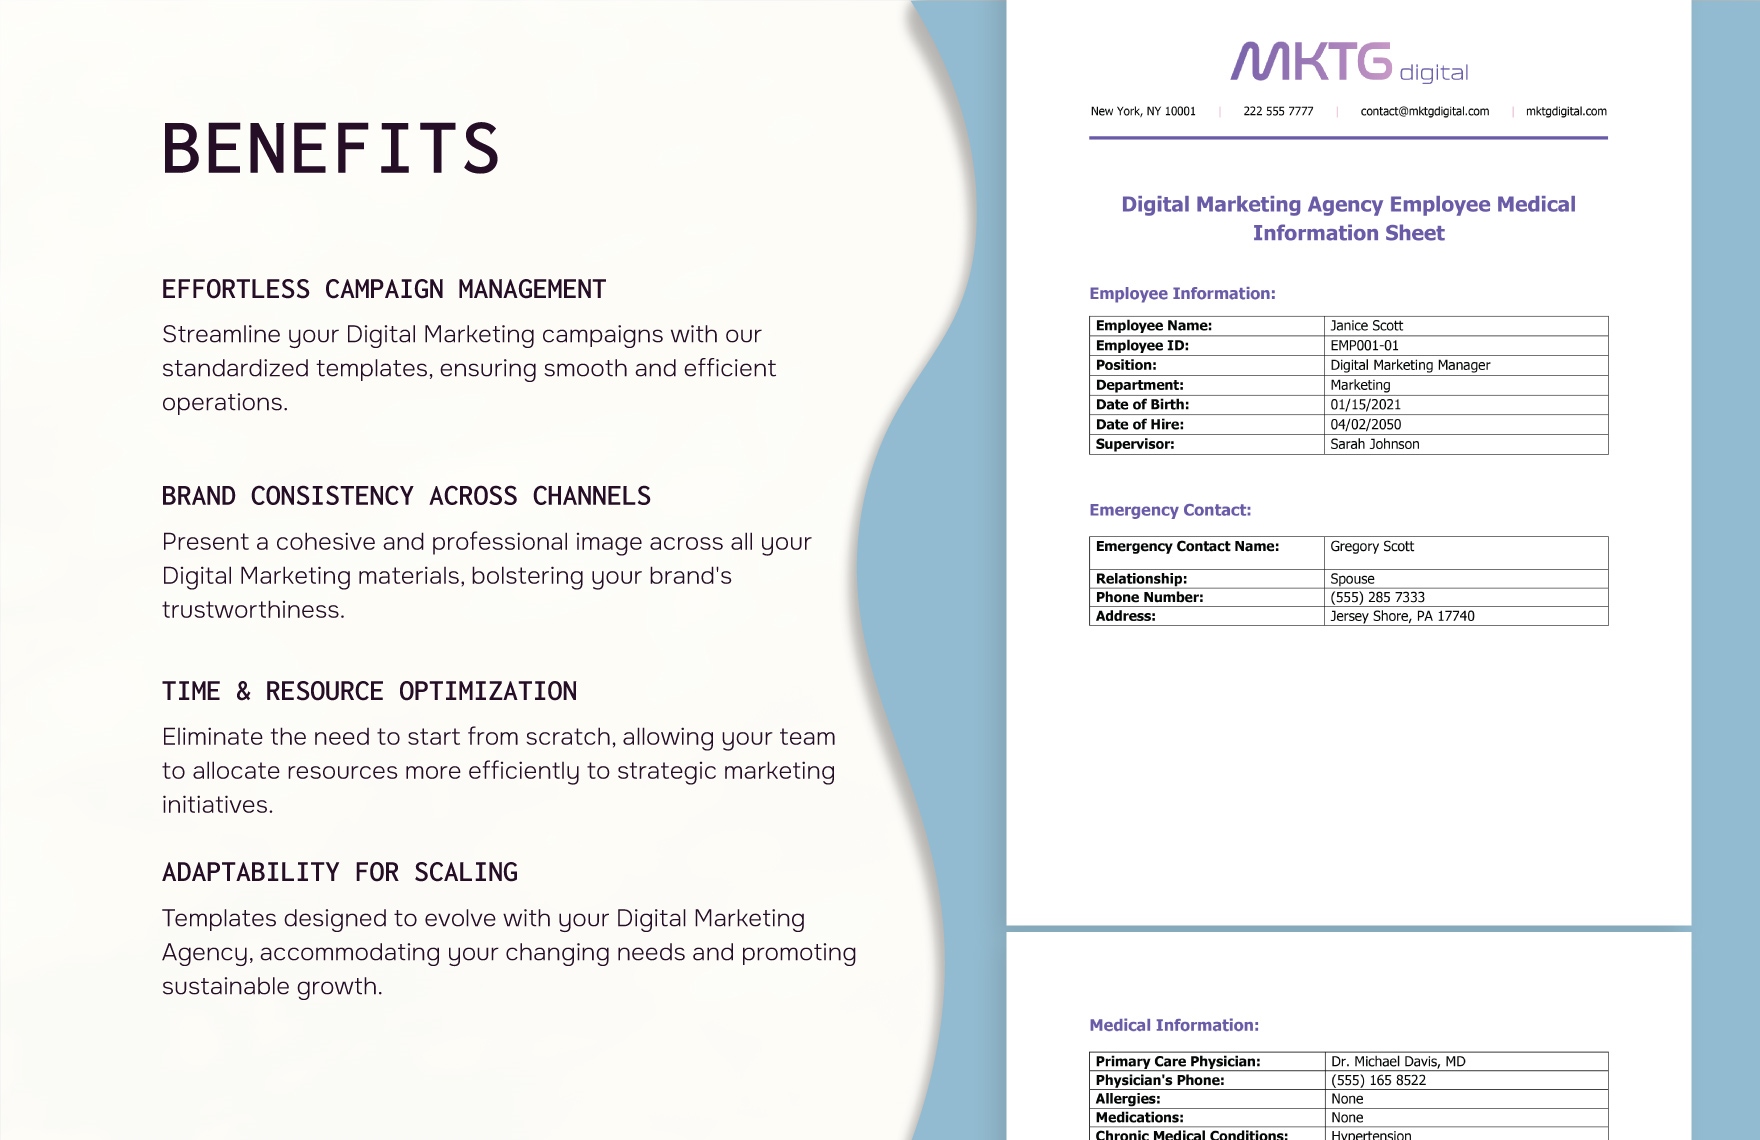 Digital Marketing Agency Employee Medical Information Sheet Template